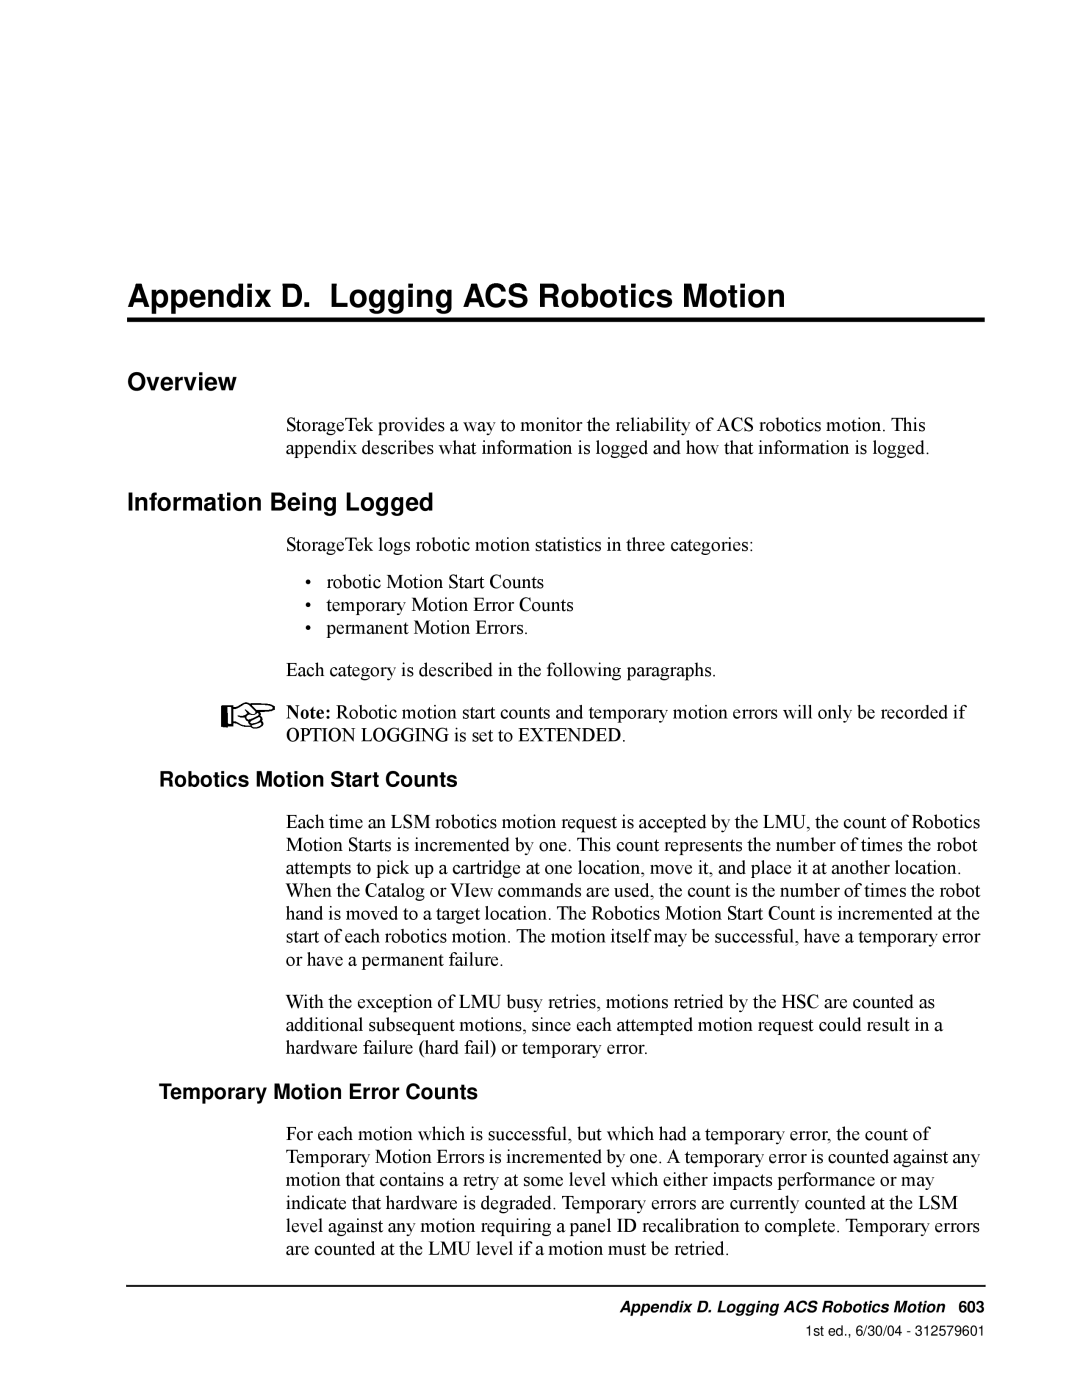 StorageTek 6 Appendix D. Logging ACS Robotics Motion, Information Being Logged, Robotics Motion Start Counts, Overview 